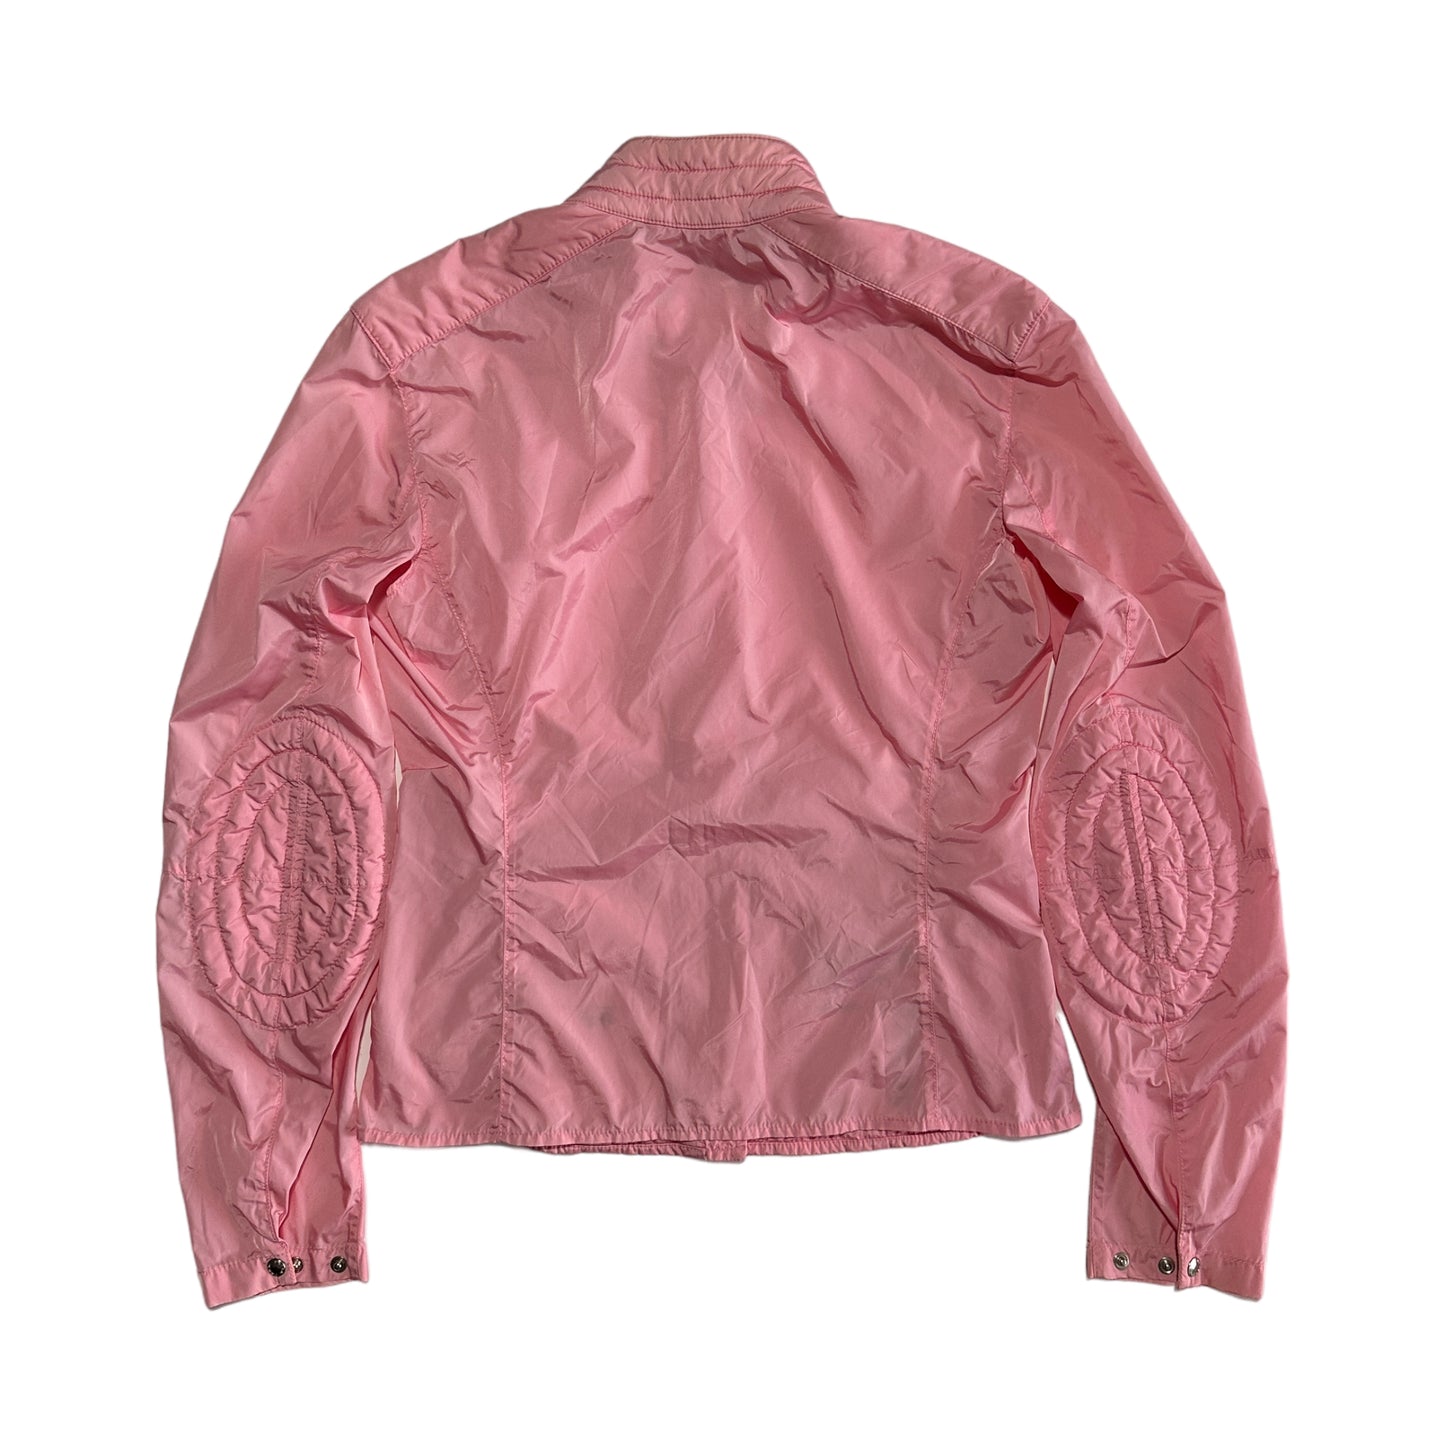 S/S 2000 Prada Light Pink Jacket (42)